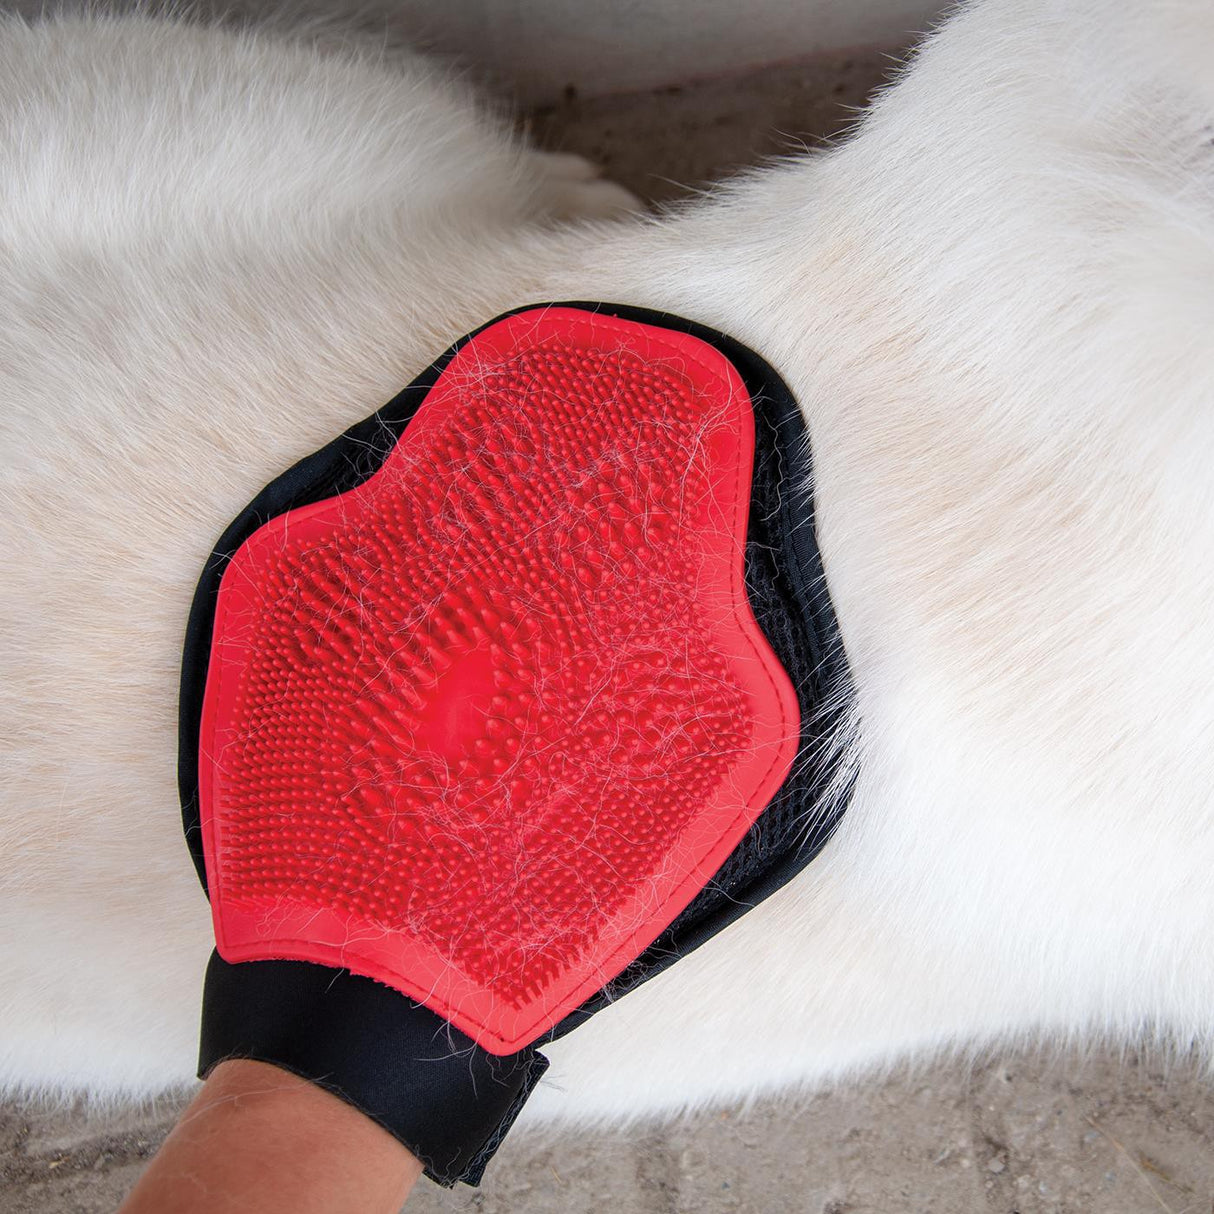 Shedrow K9 Grooming Glove